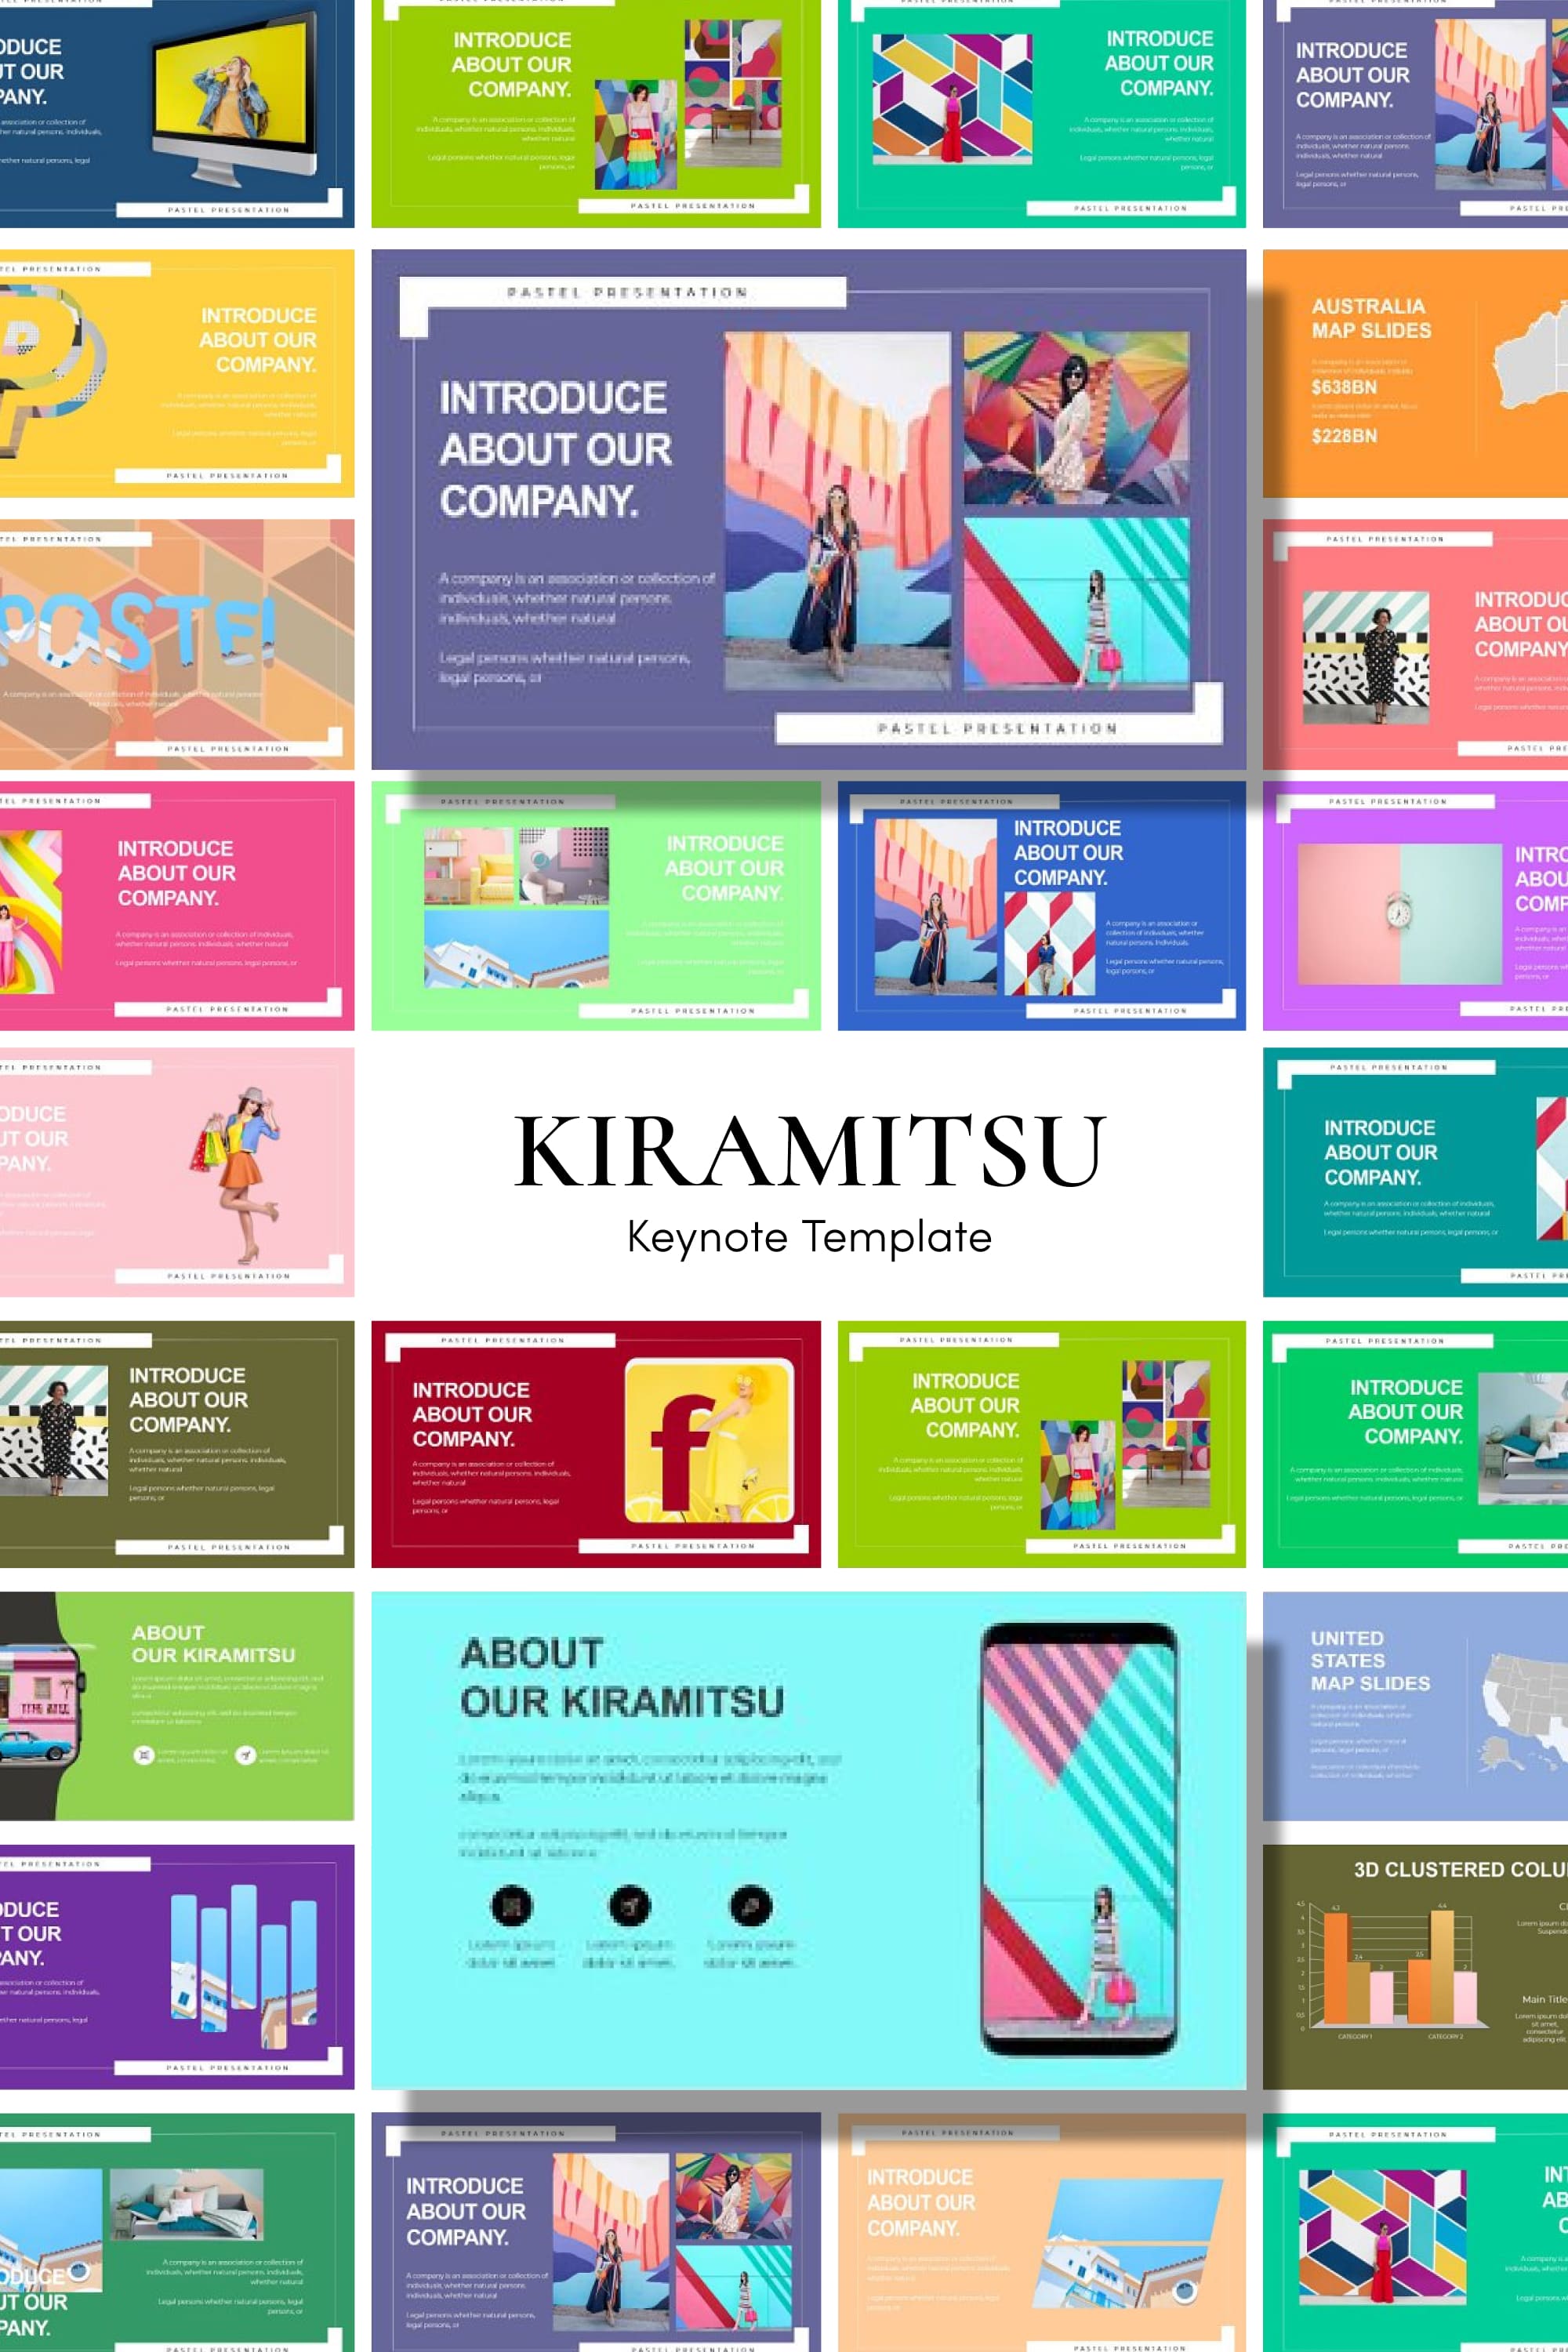 Kiramitsu keynote template - pinterest image preview.